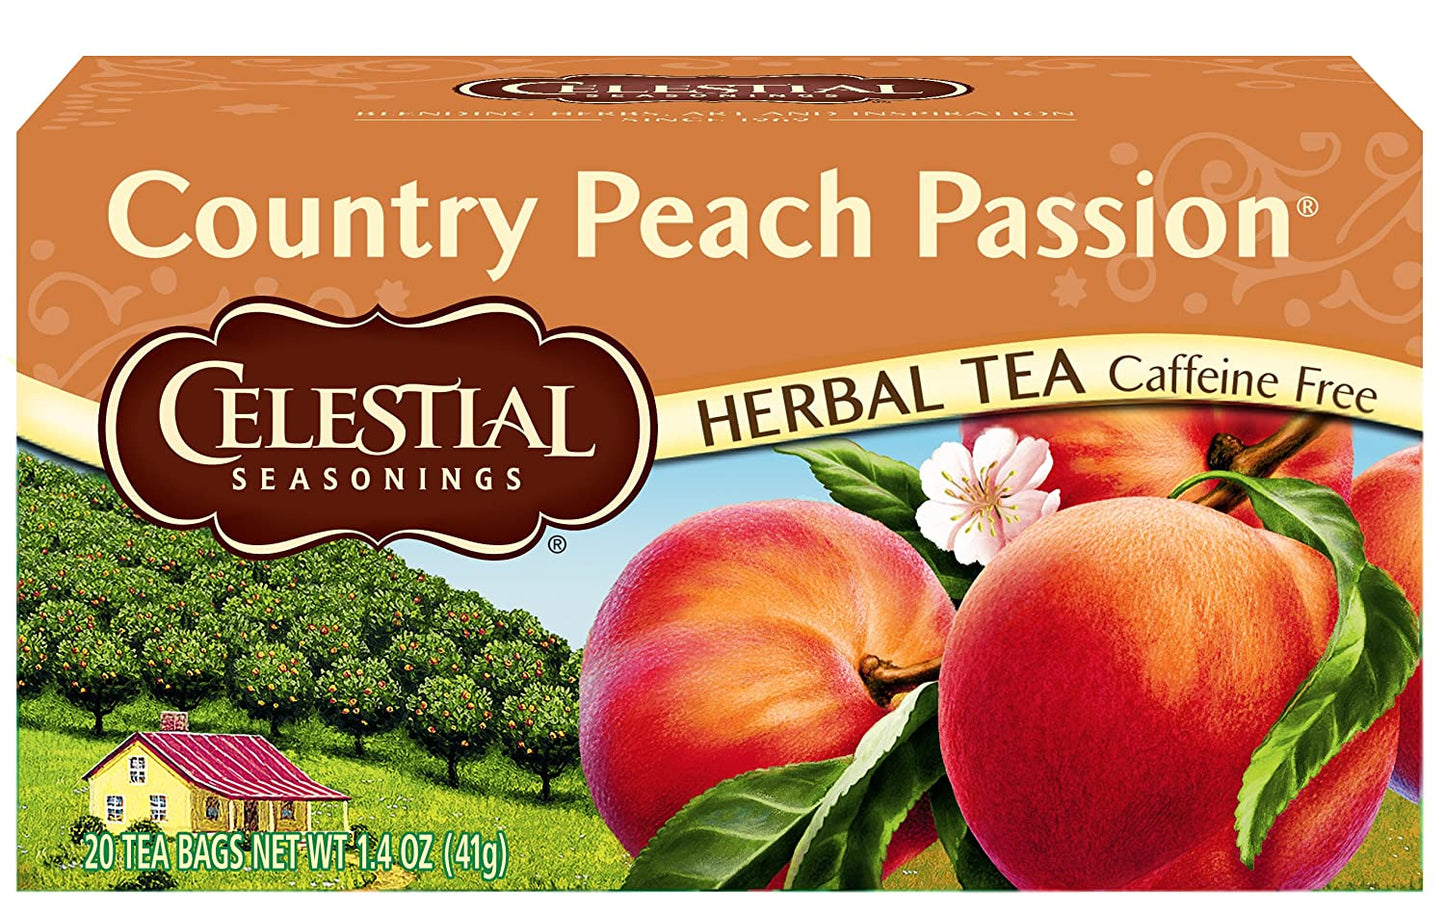 Celestial Seasonings Country Peach Passion